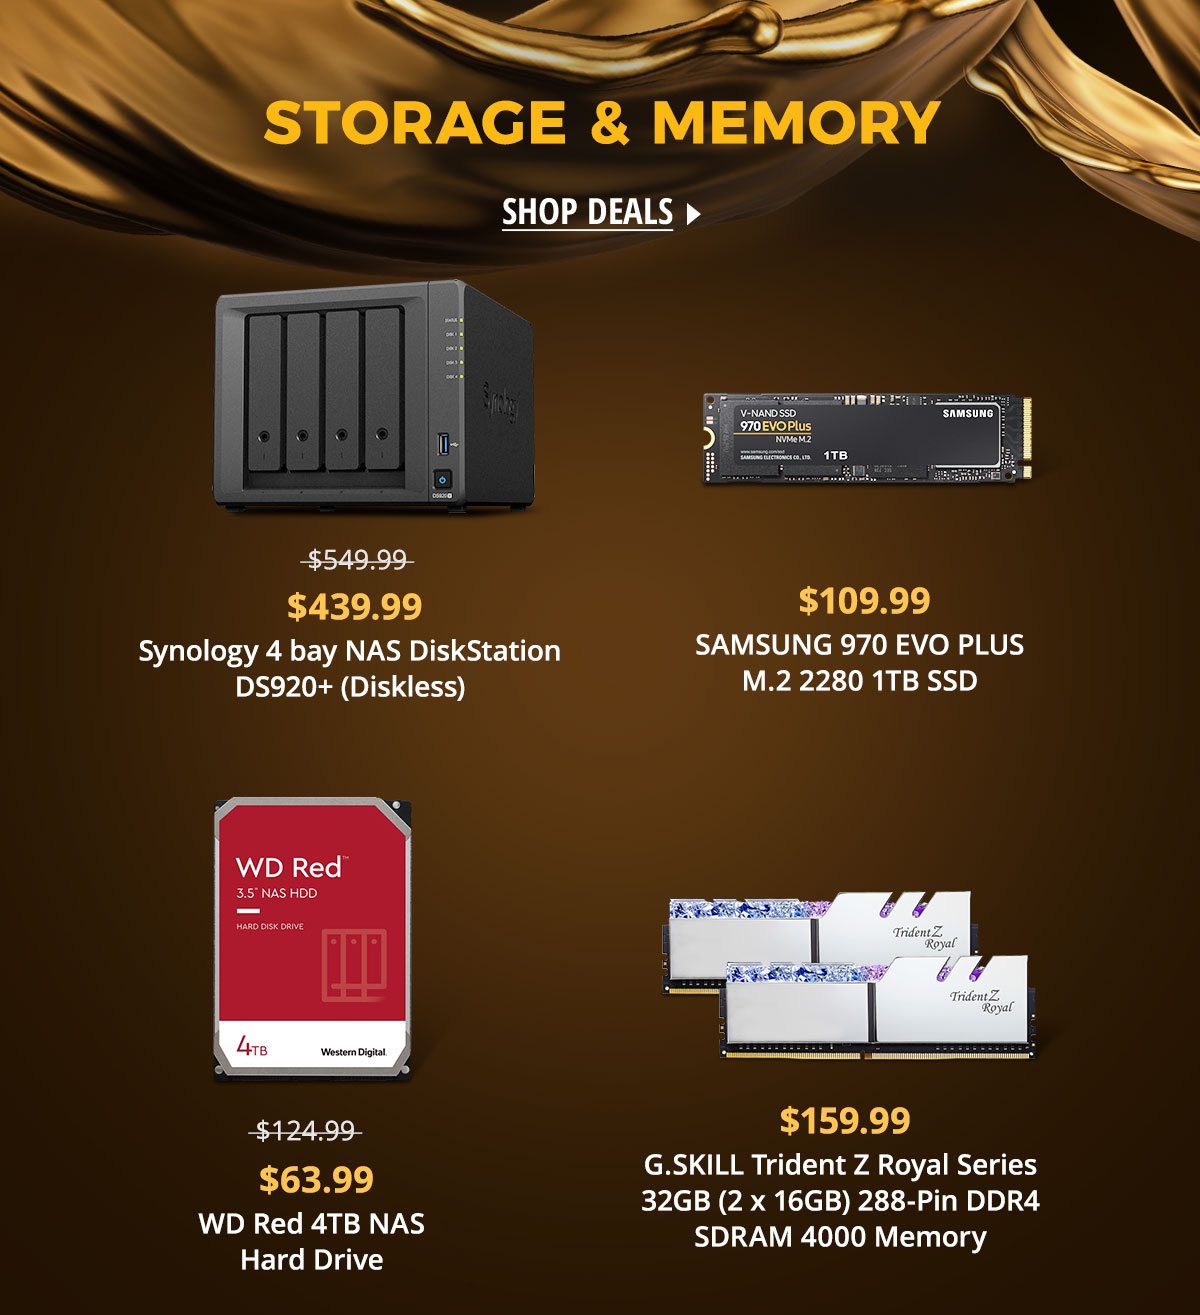 Storage & Memory